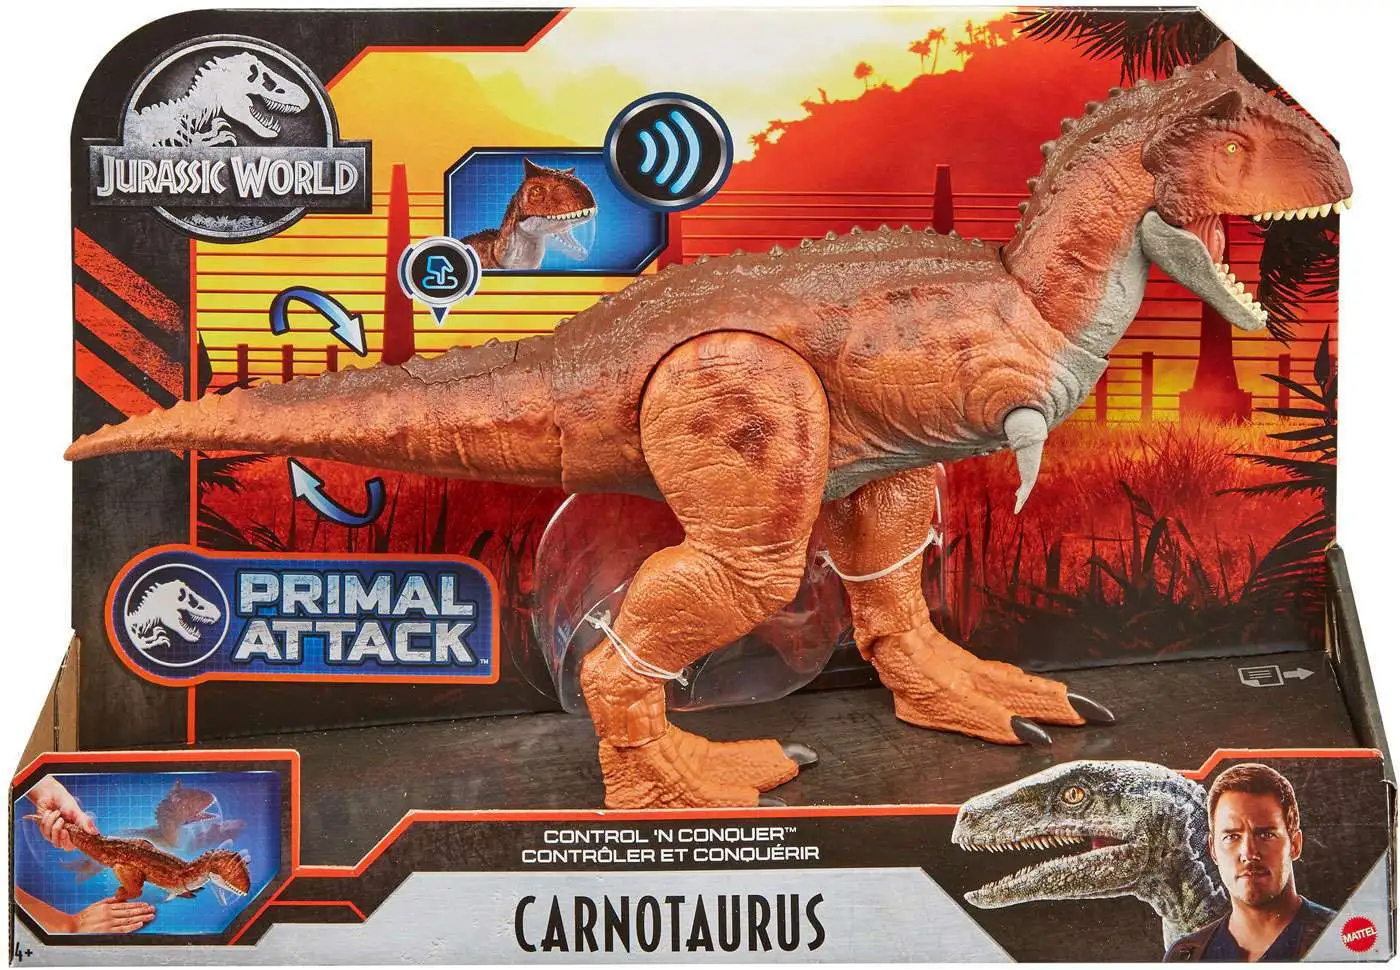 Jurassic World Action Attack Carnotaurus Exclusivo 